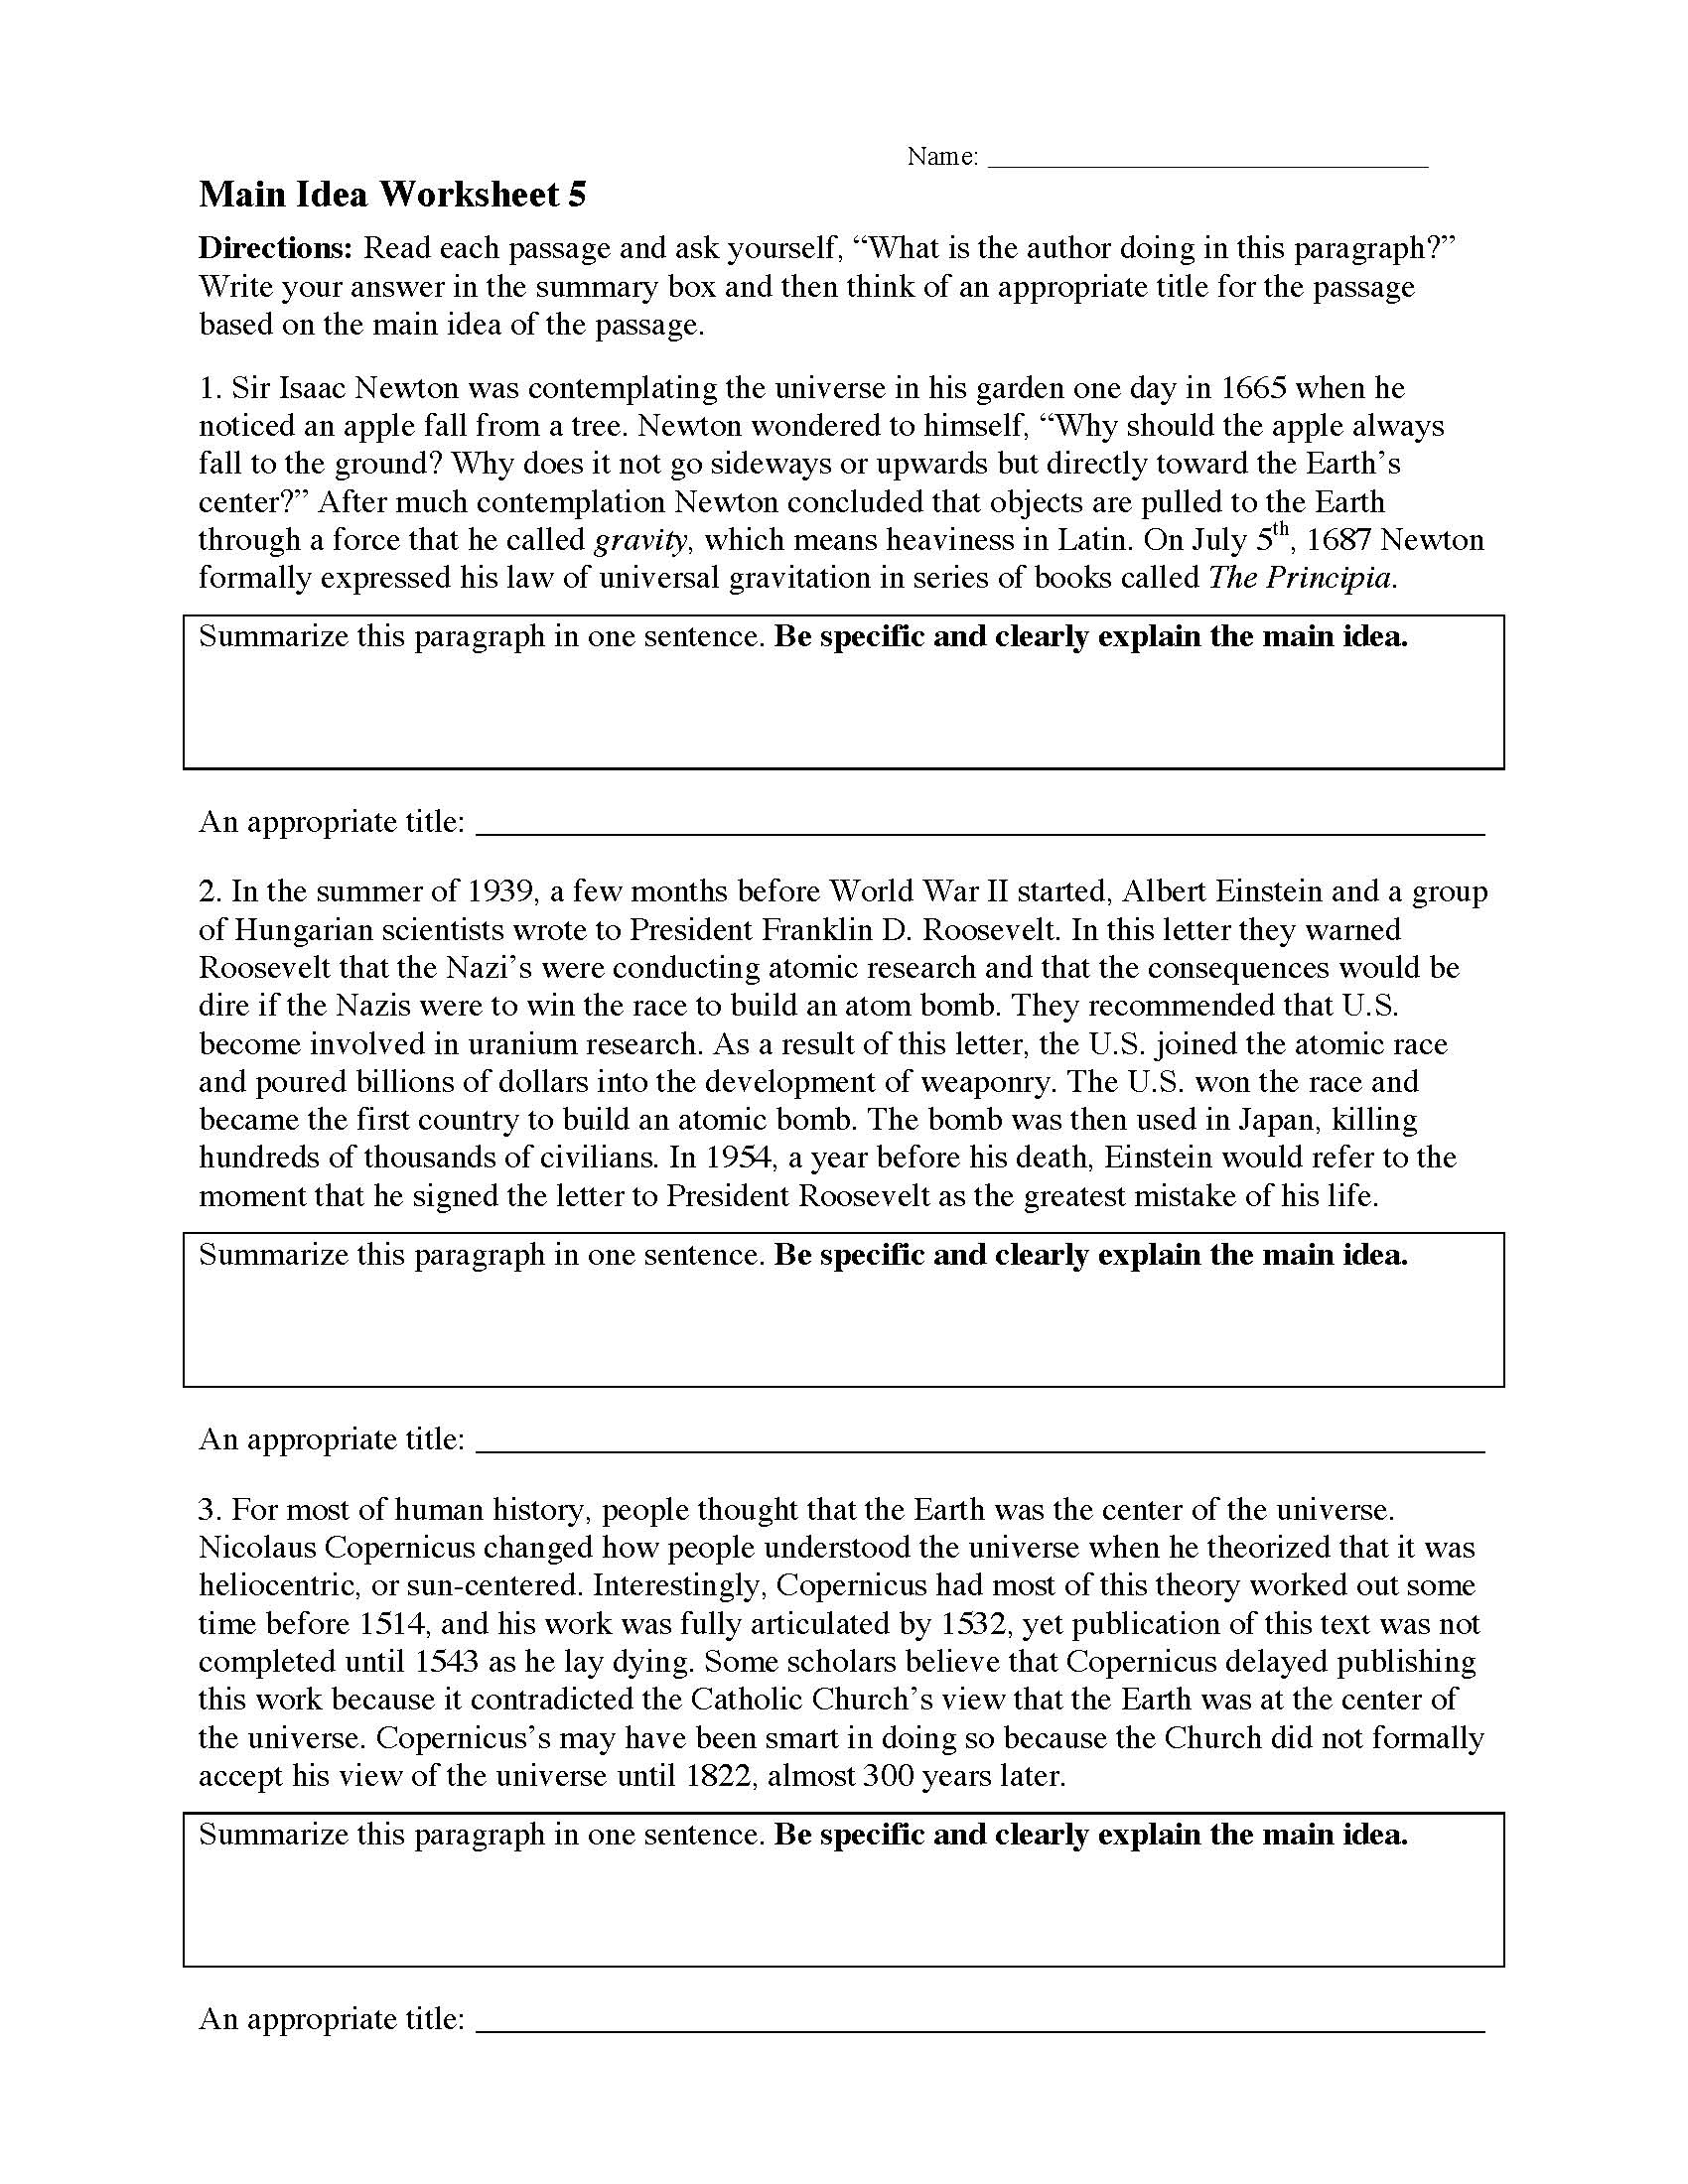 Main Idea Worksheet 11  Reading Activity Intended For Main Idea Worksheet 5